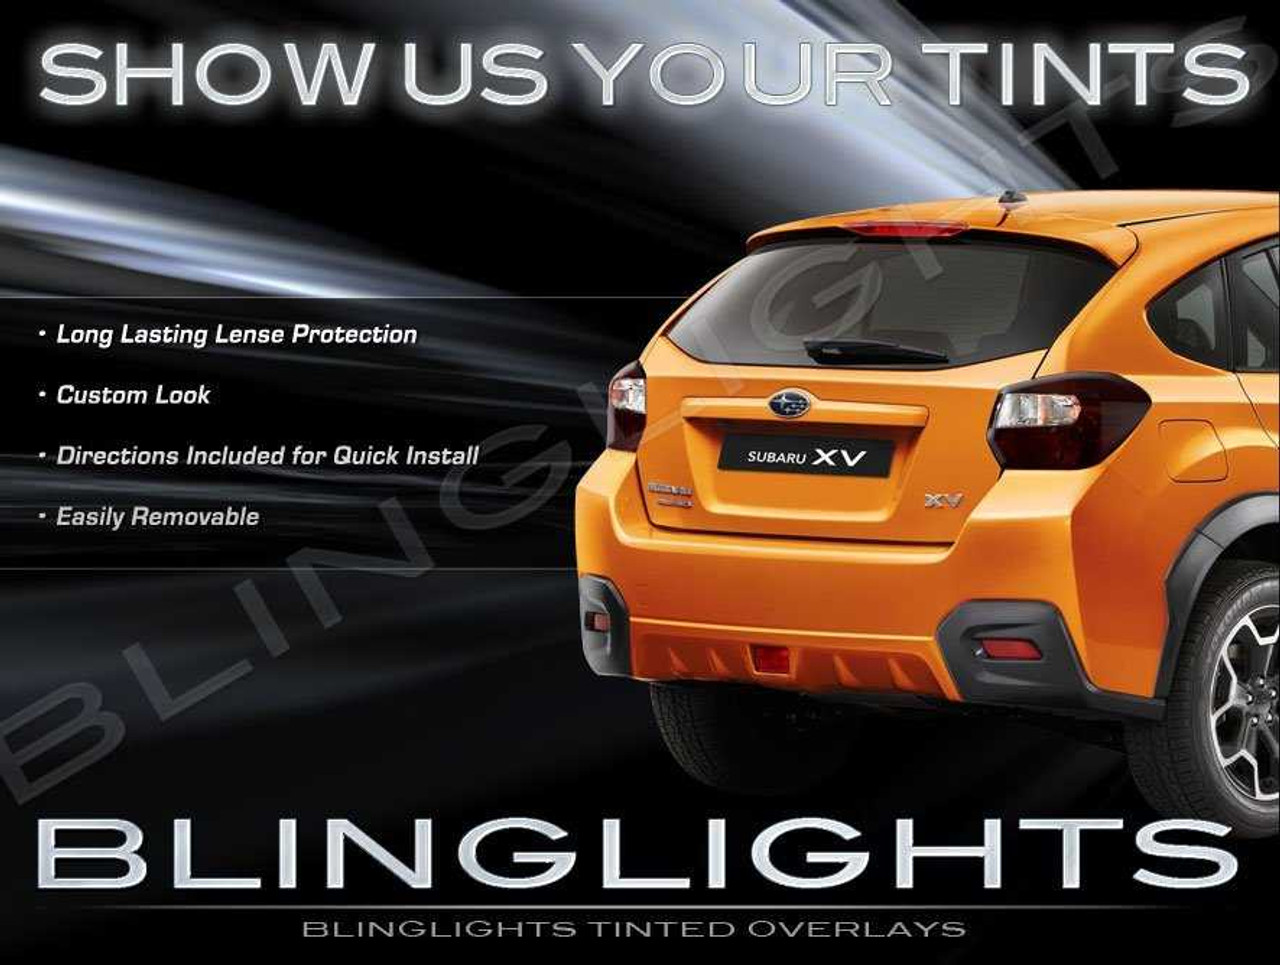 BlingLights Brand Tinted Taillight Film Covers for 2013-2017 Subaru XV Crosstrek